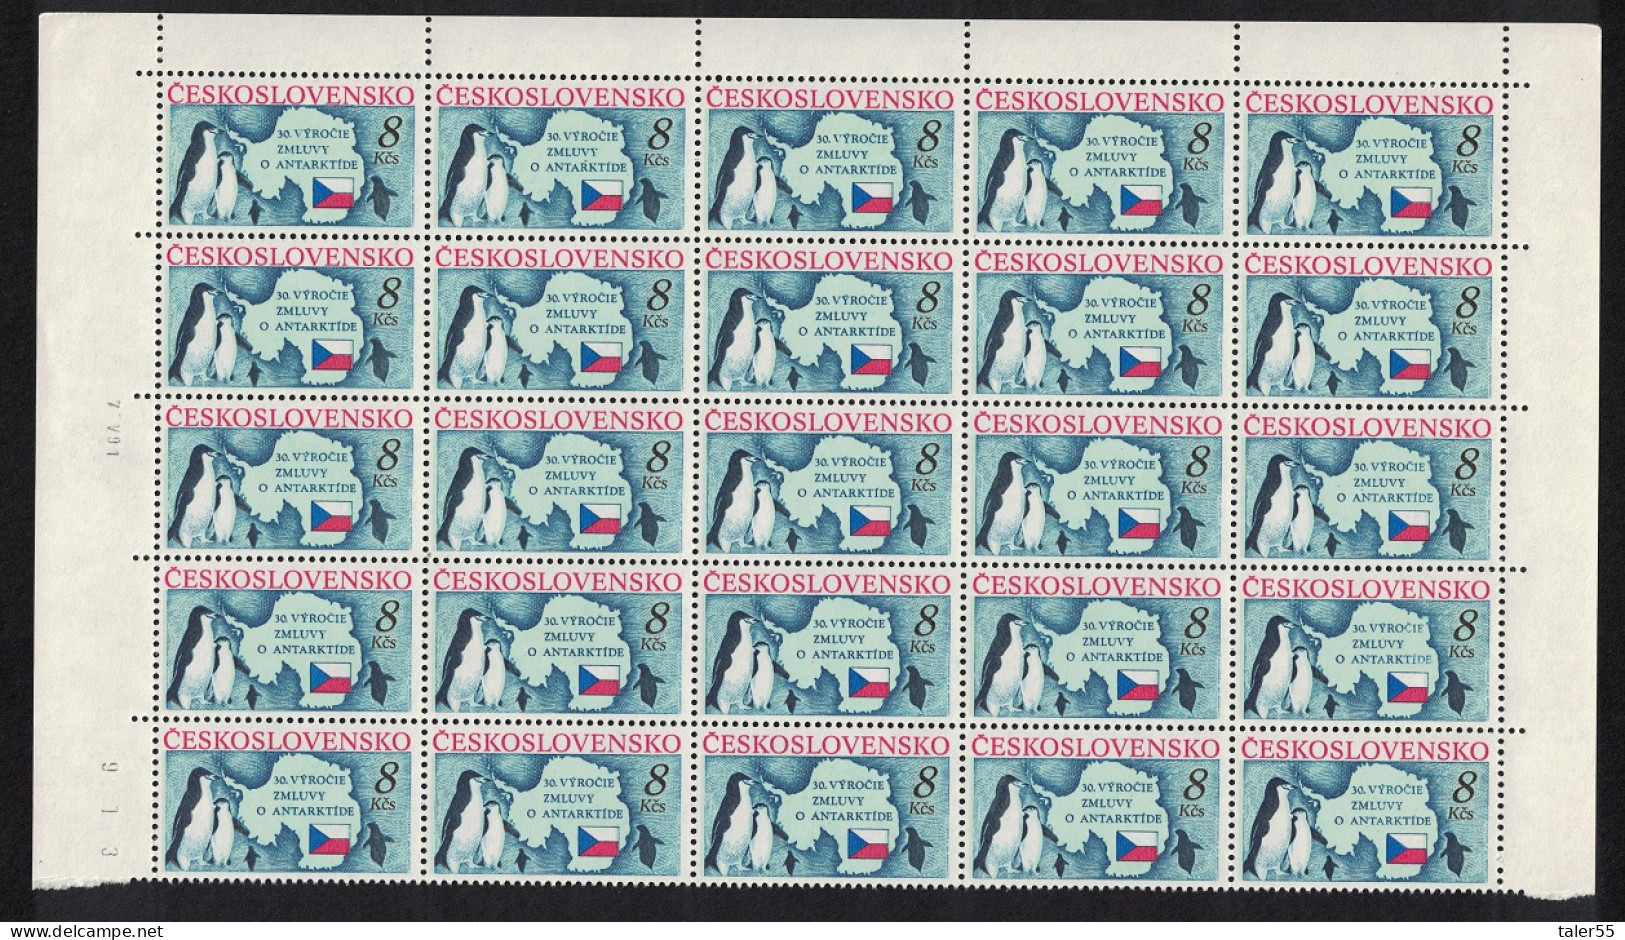 Czechoslovakia Penguins Birds Antarctic Treaty Half Sheet 1991 MNH SG#3061 - Unused Stamps